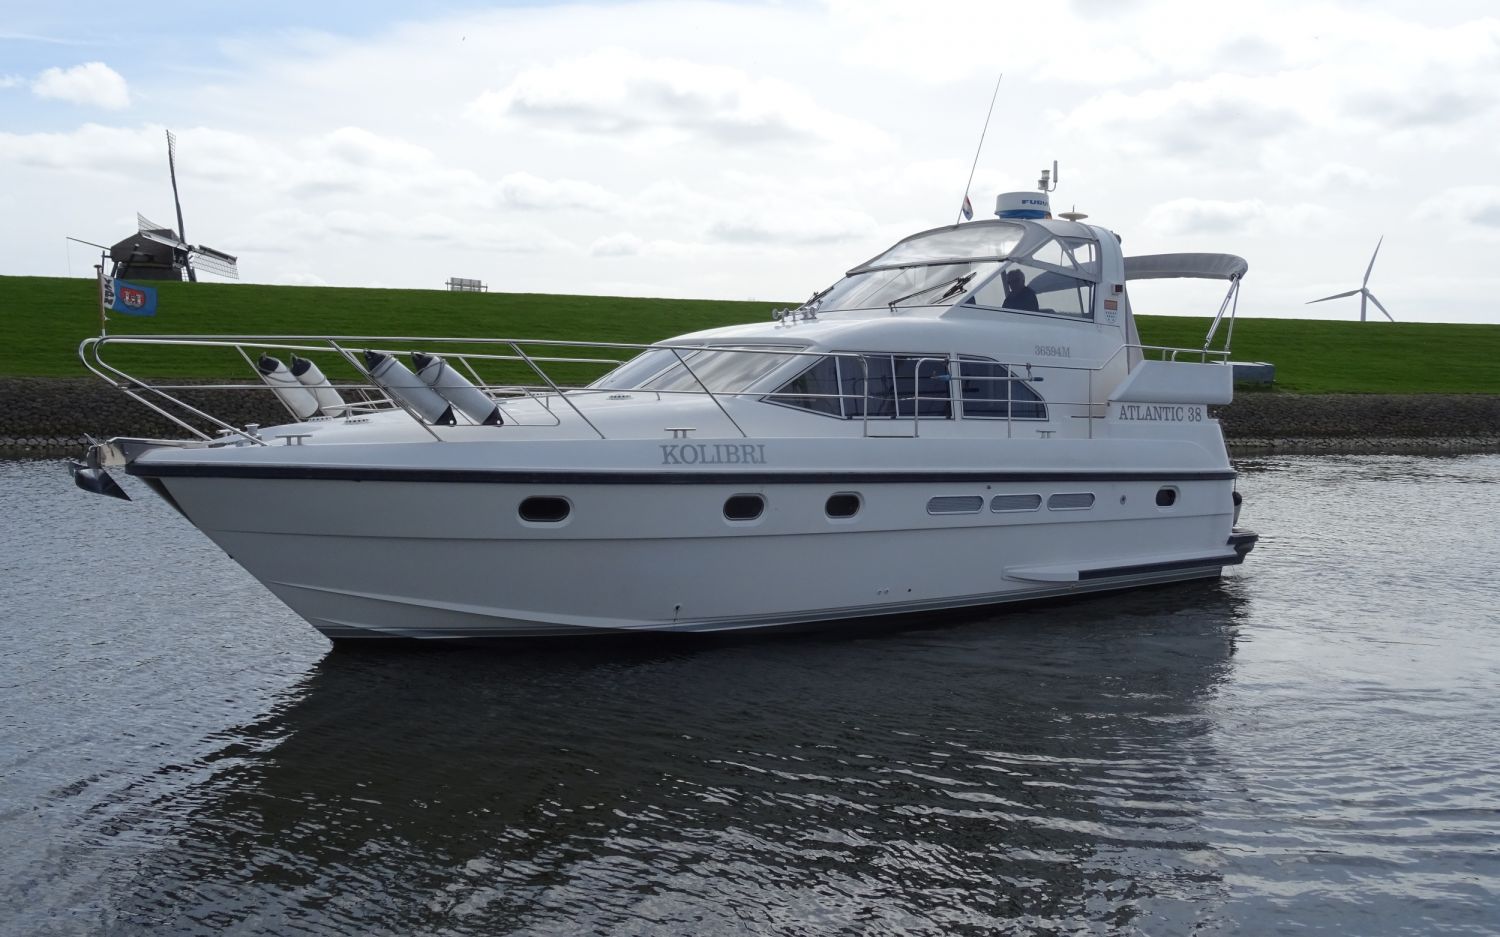 Atlantic 38, Motor Yacht for sale by HollandBoat International Yachtbrokers